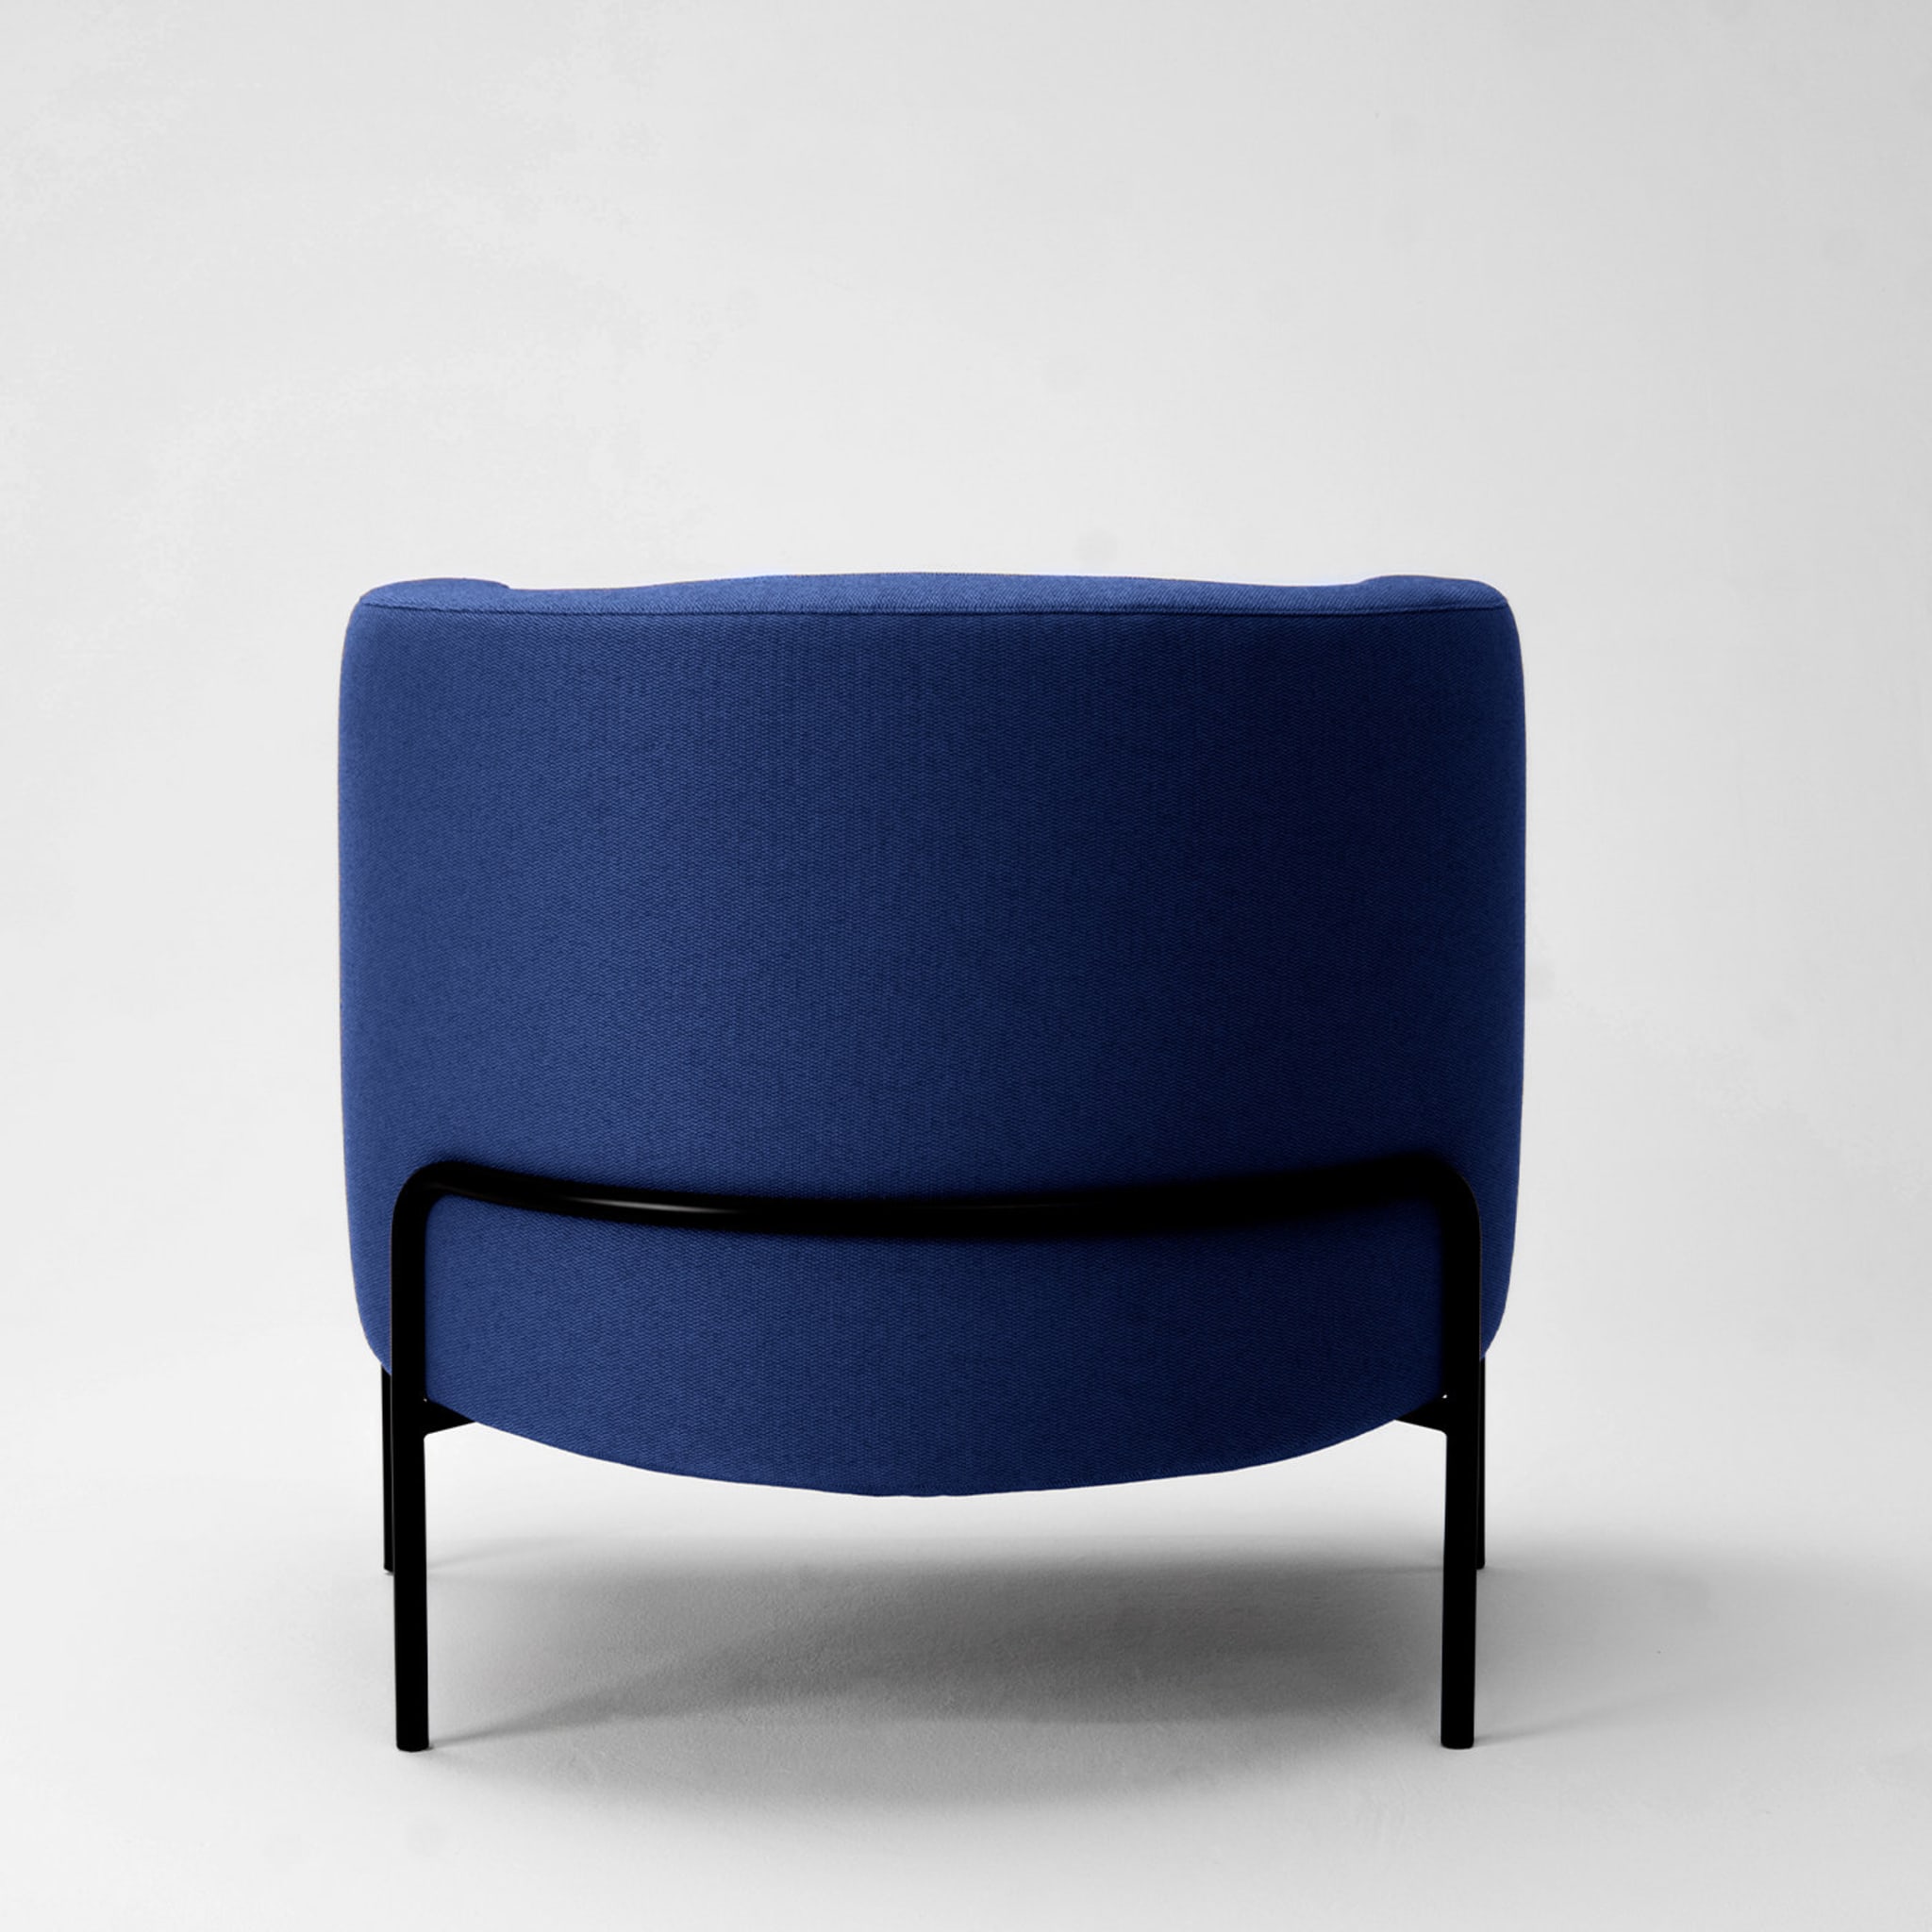 Blauer Laetitia-Sessel von Fabio Fantolino - Alternative Ansicht 2